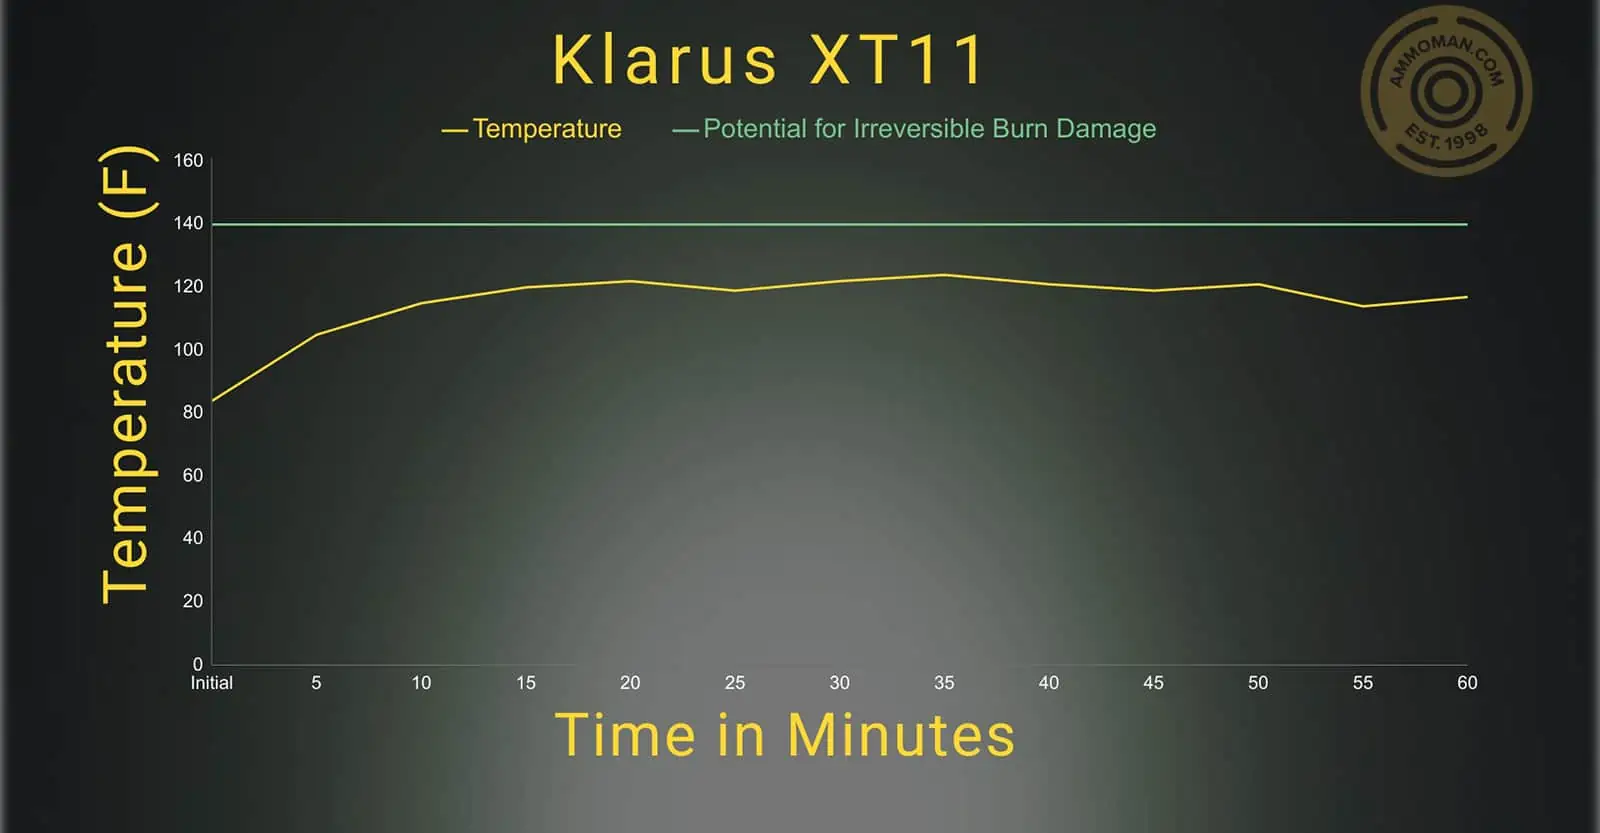 Klarus XT11 temperature profile